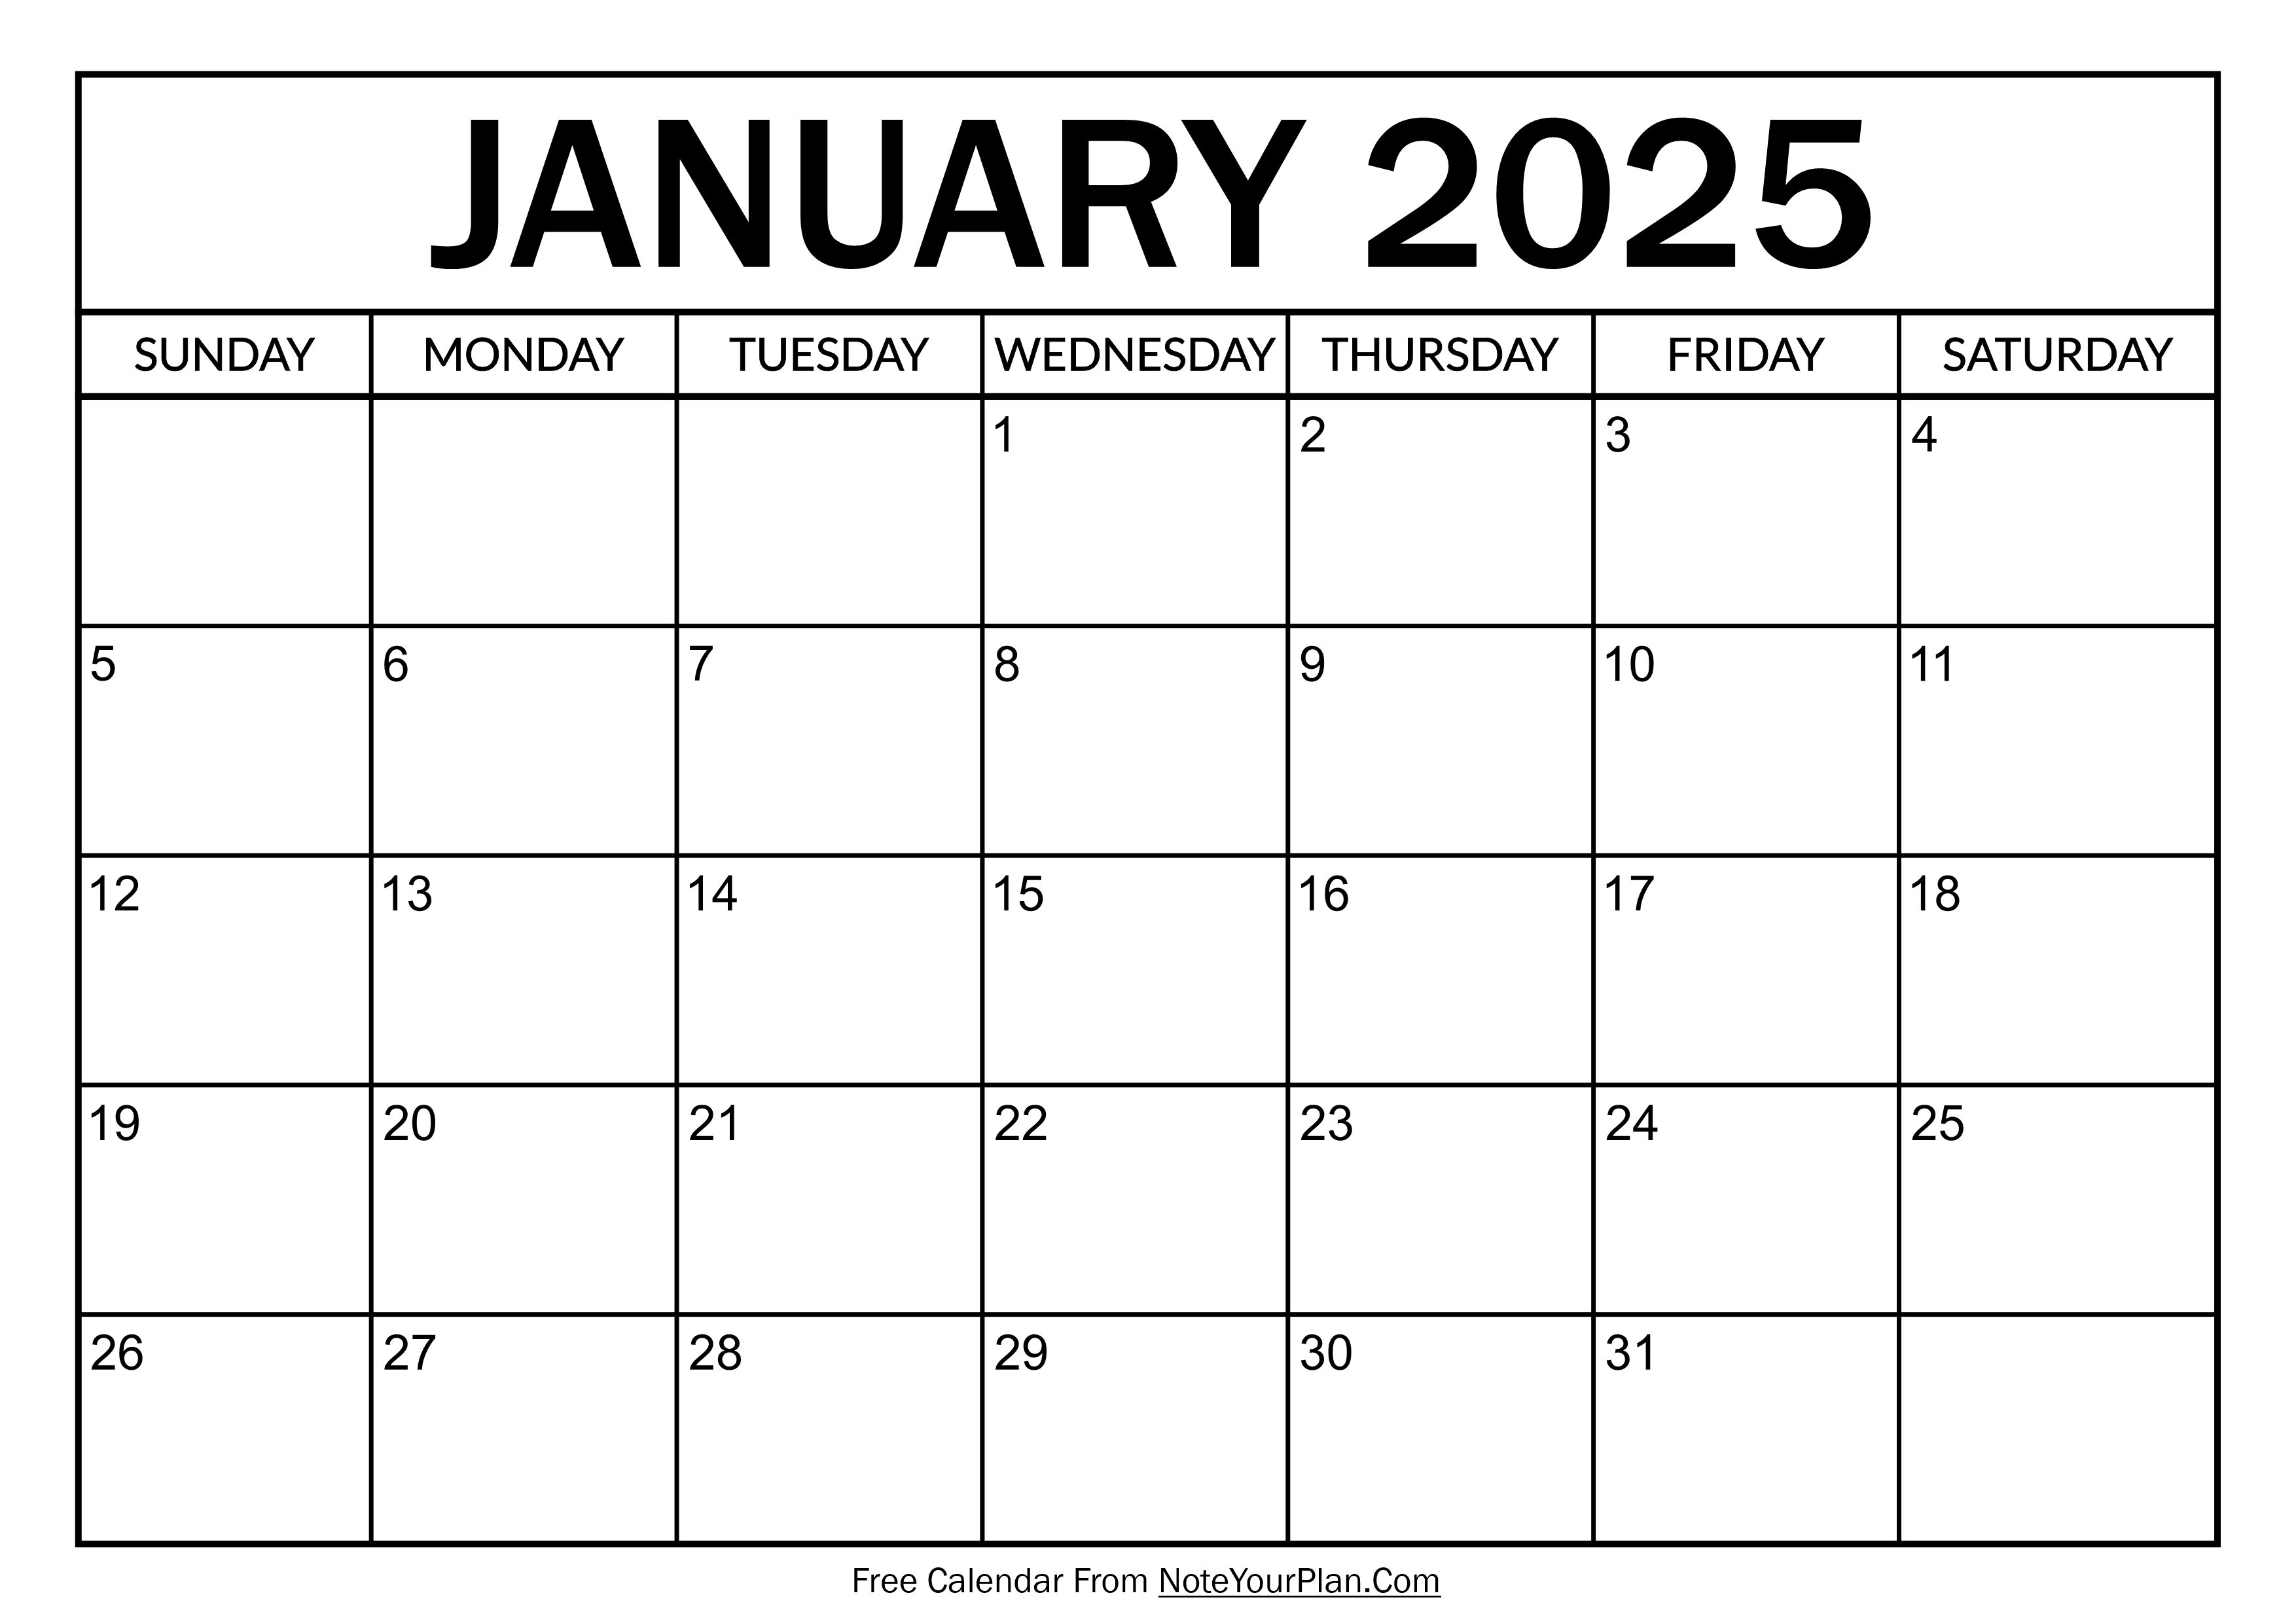 Free January Calendar 2025